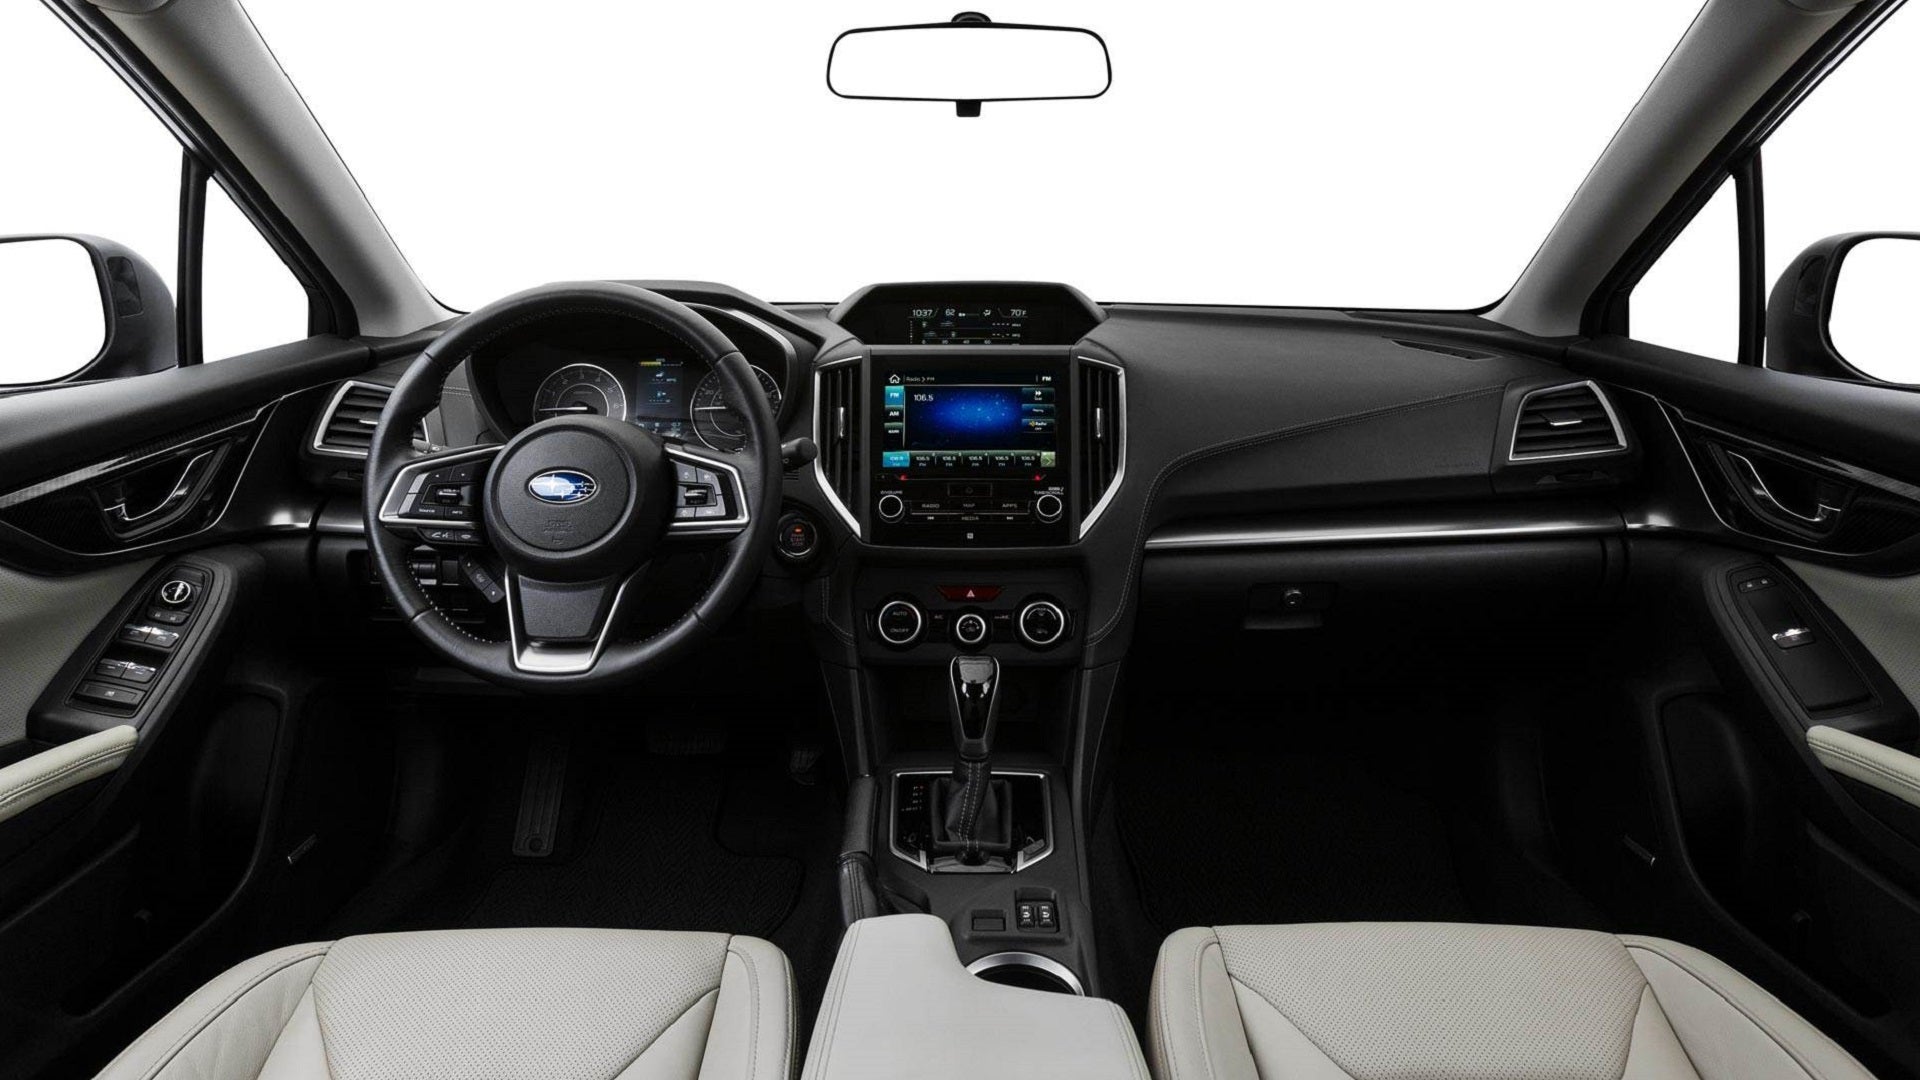 Subaru Impreza Among Wards Ten Best Interiors